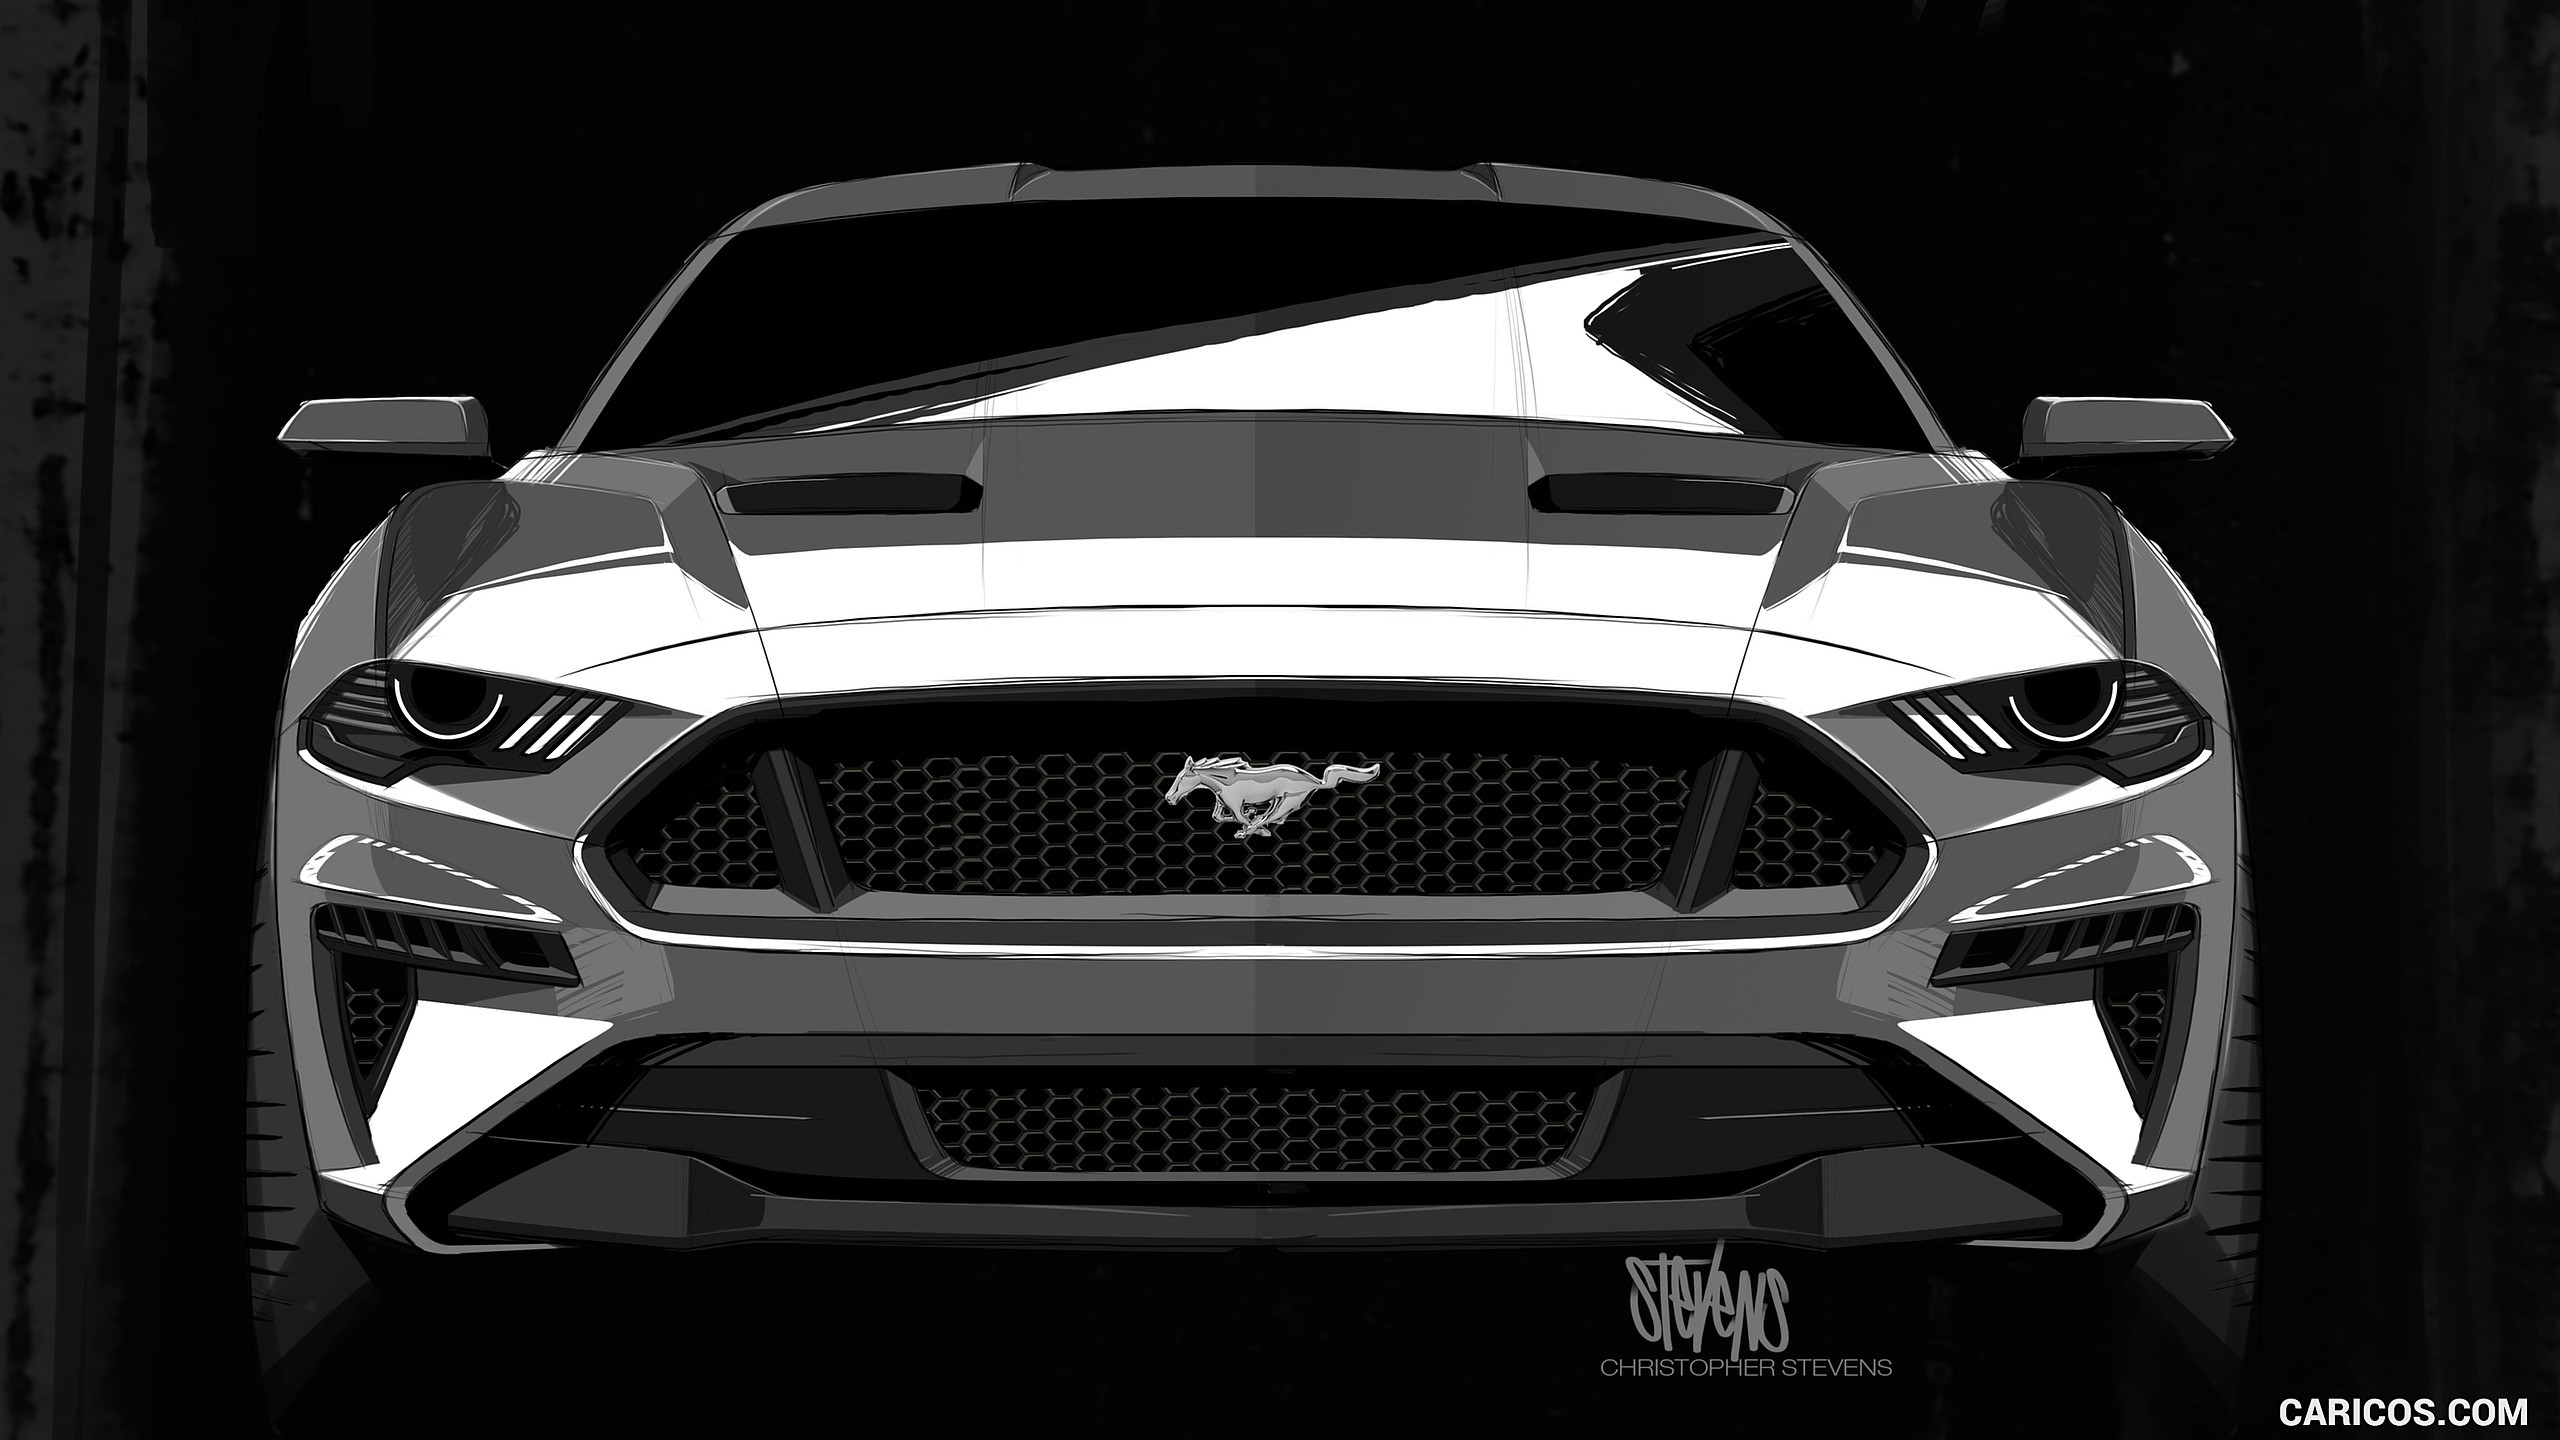 2560x1440 Ford Mustang Shelby Gt500 #Car #Ford #Gt500 #Mustang #Shelby #sport-car  #super-car #wallpaper #desktopwallpaper #hdwallpaper #car #speed |  Pinterest | Ford ...